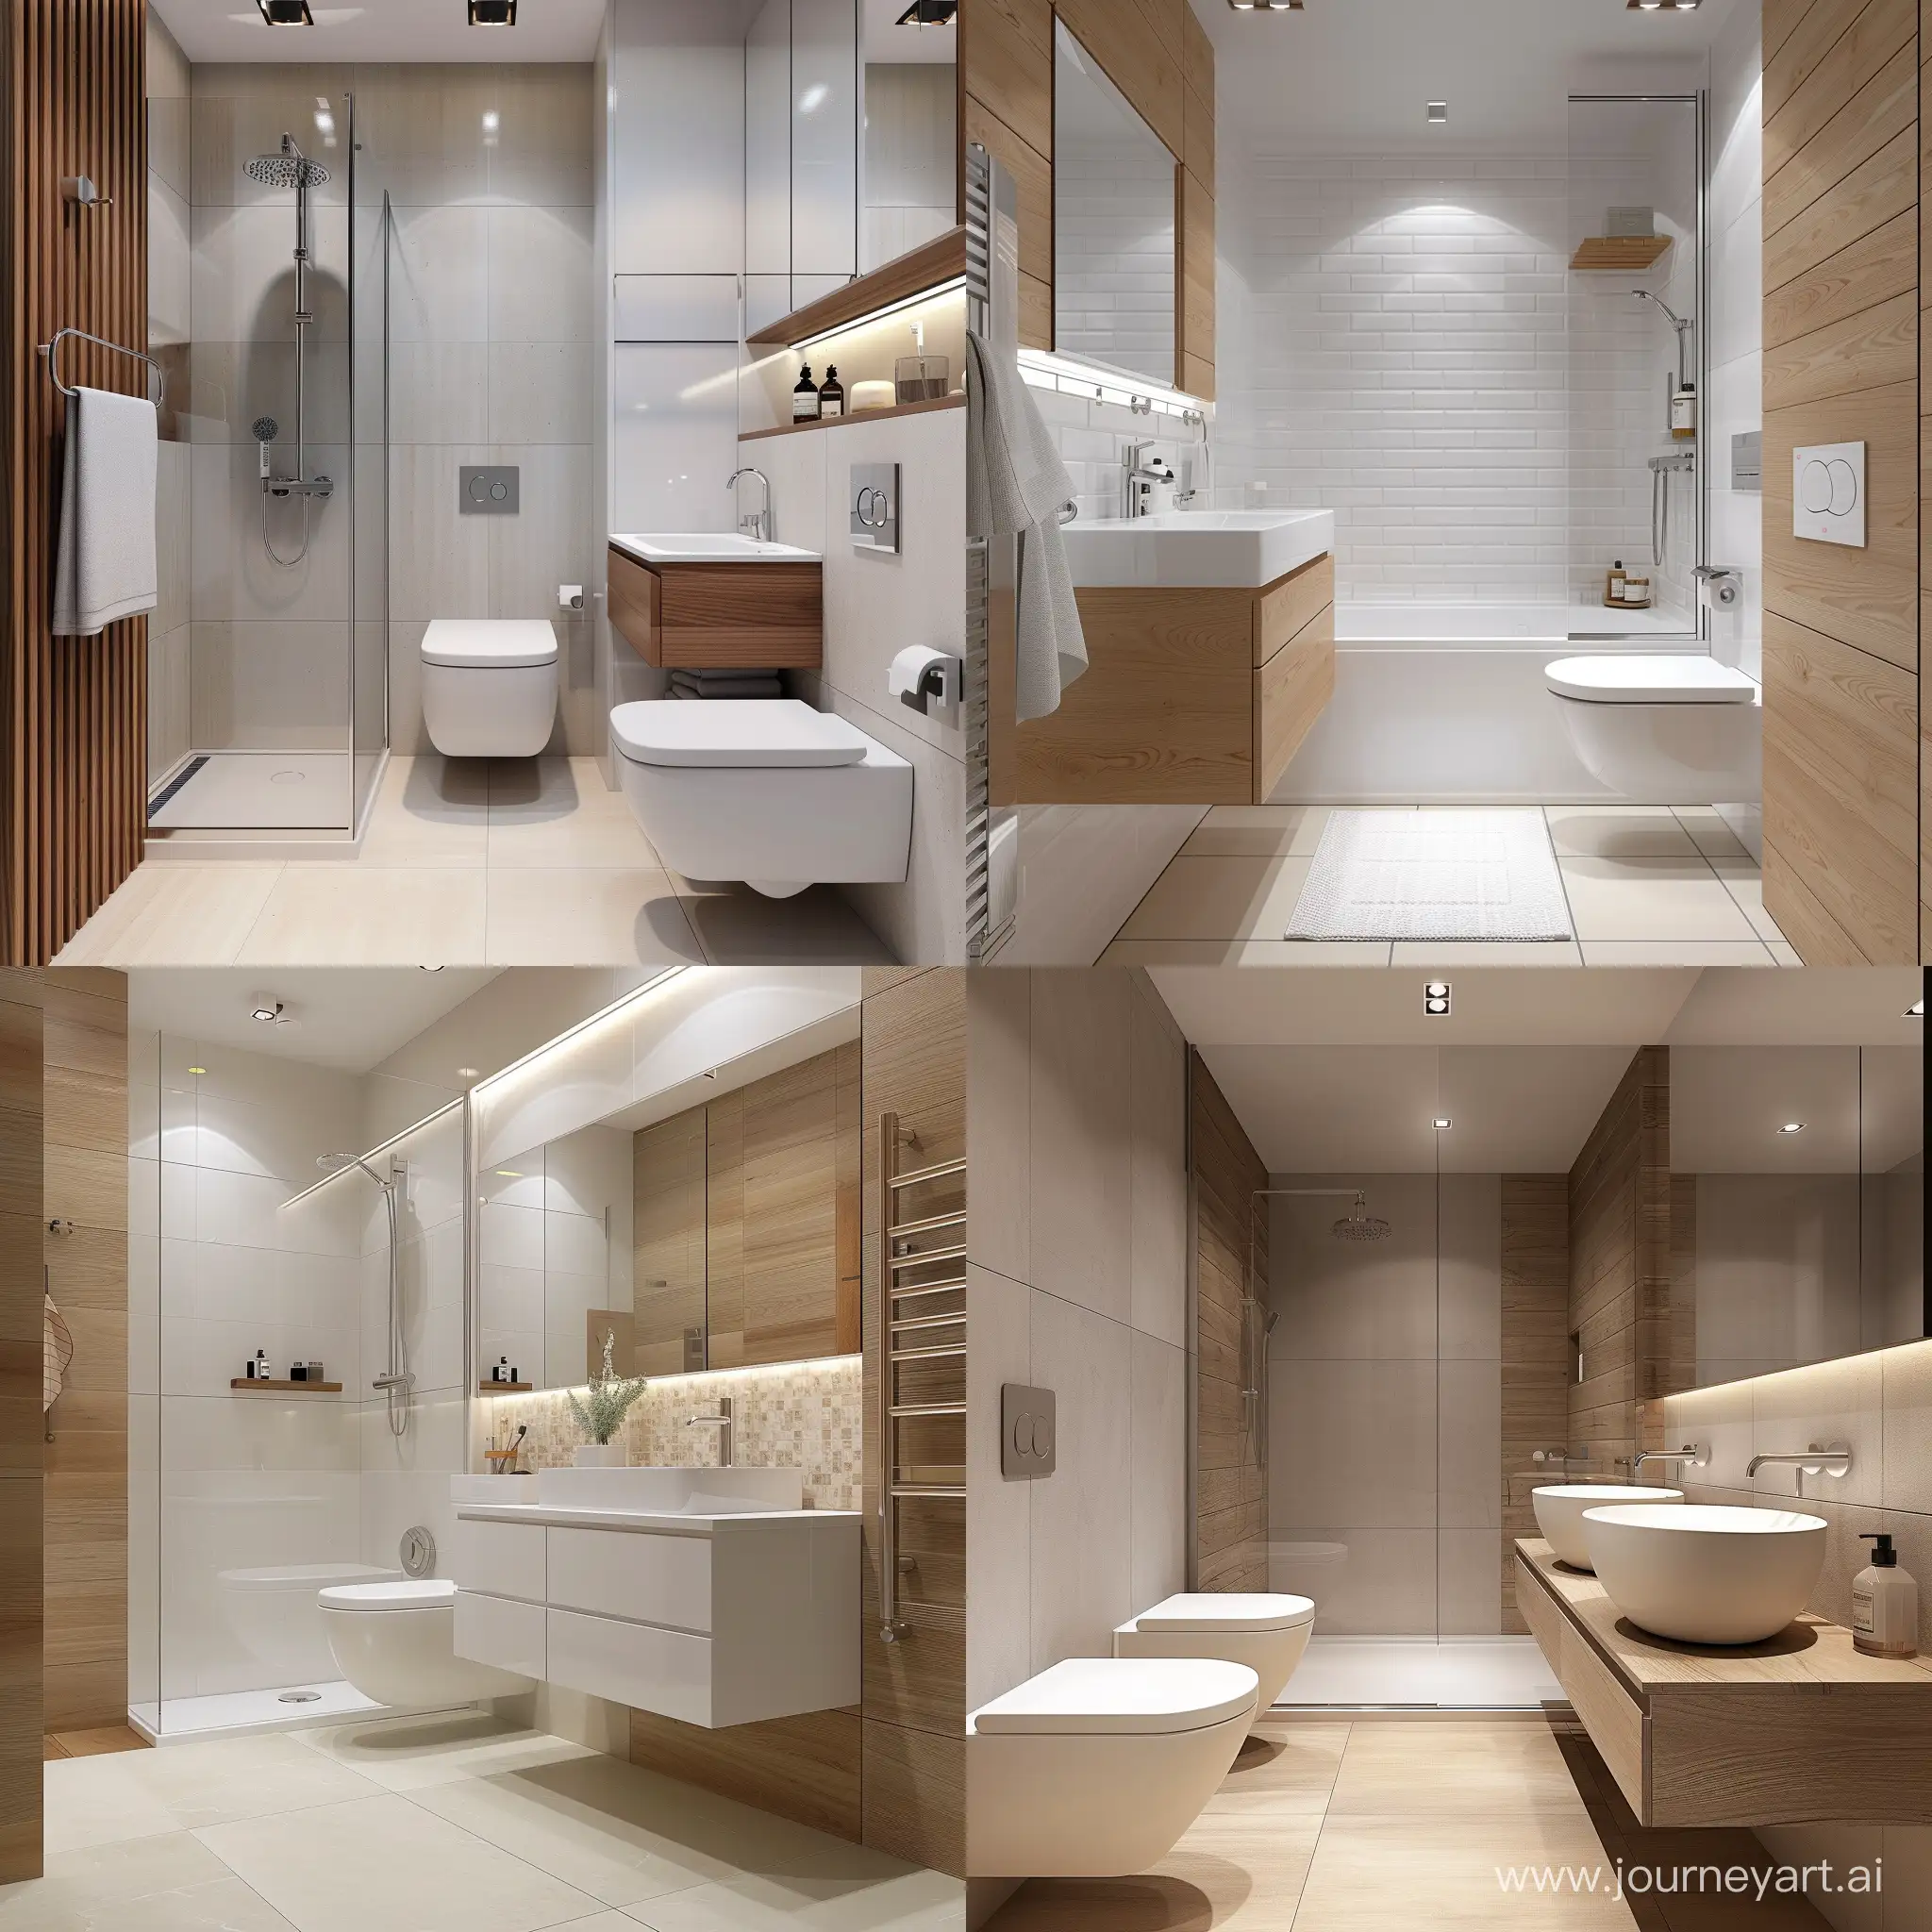 Spacious-Bathroom-Interior-with-Generous-Dimensions